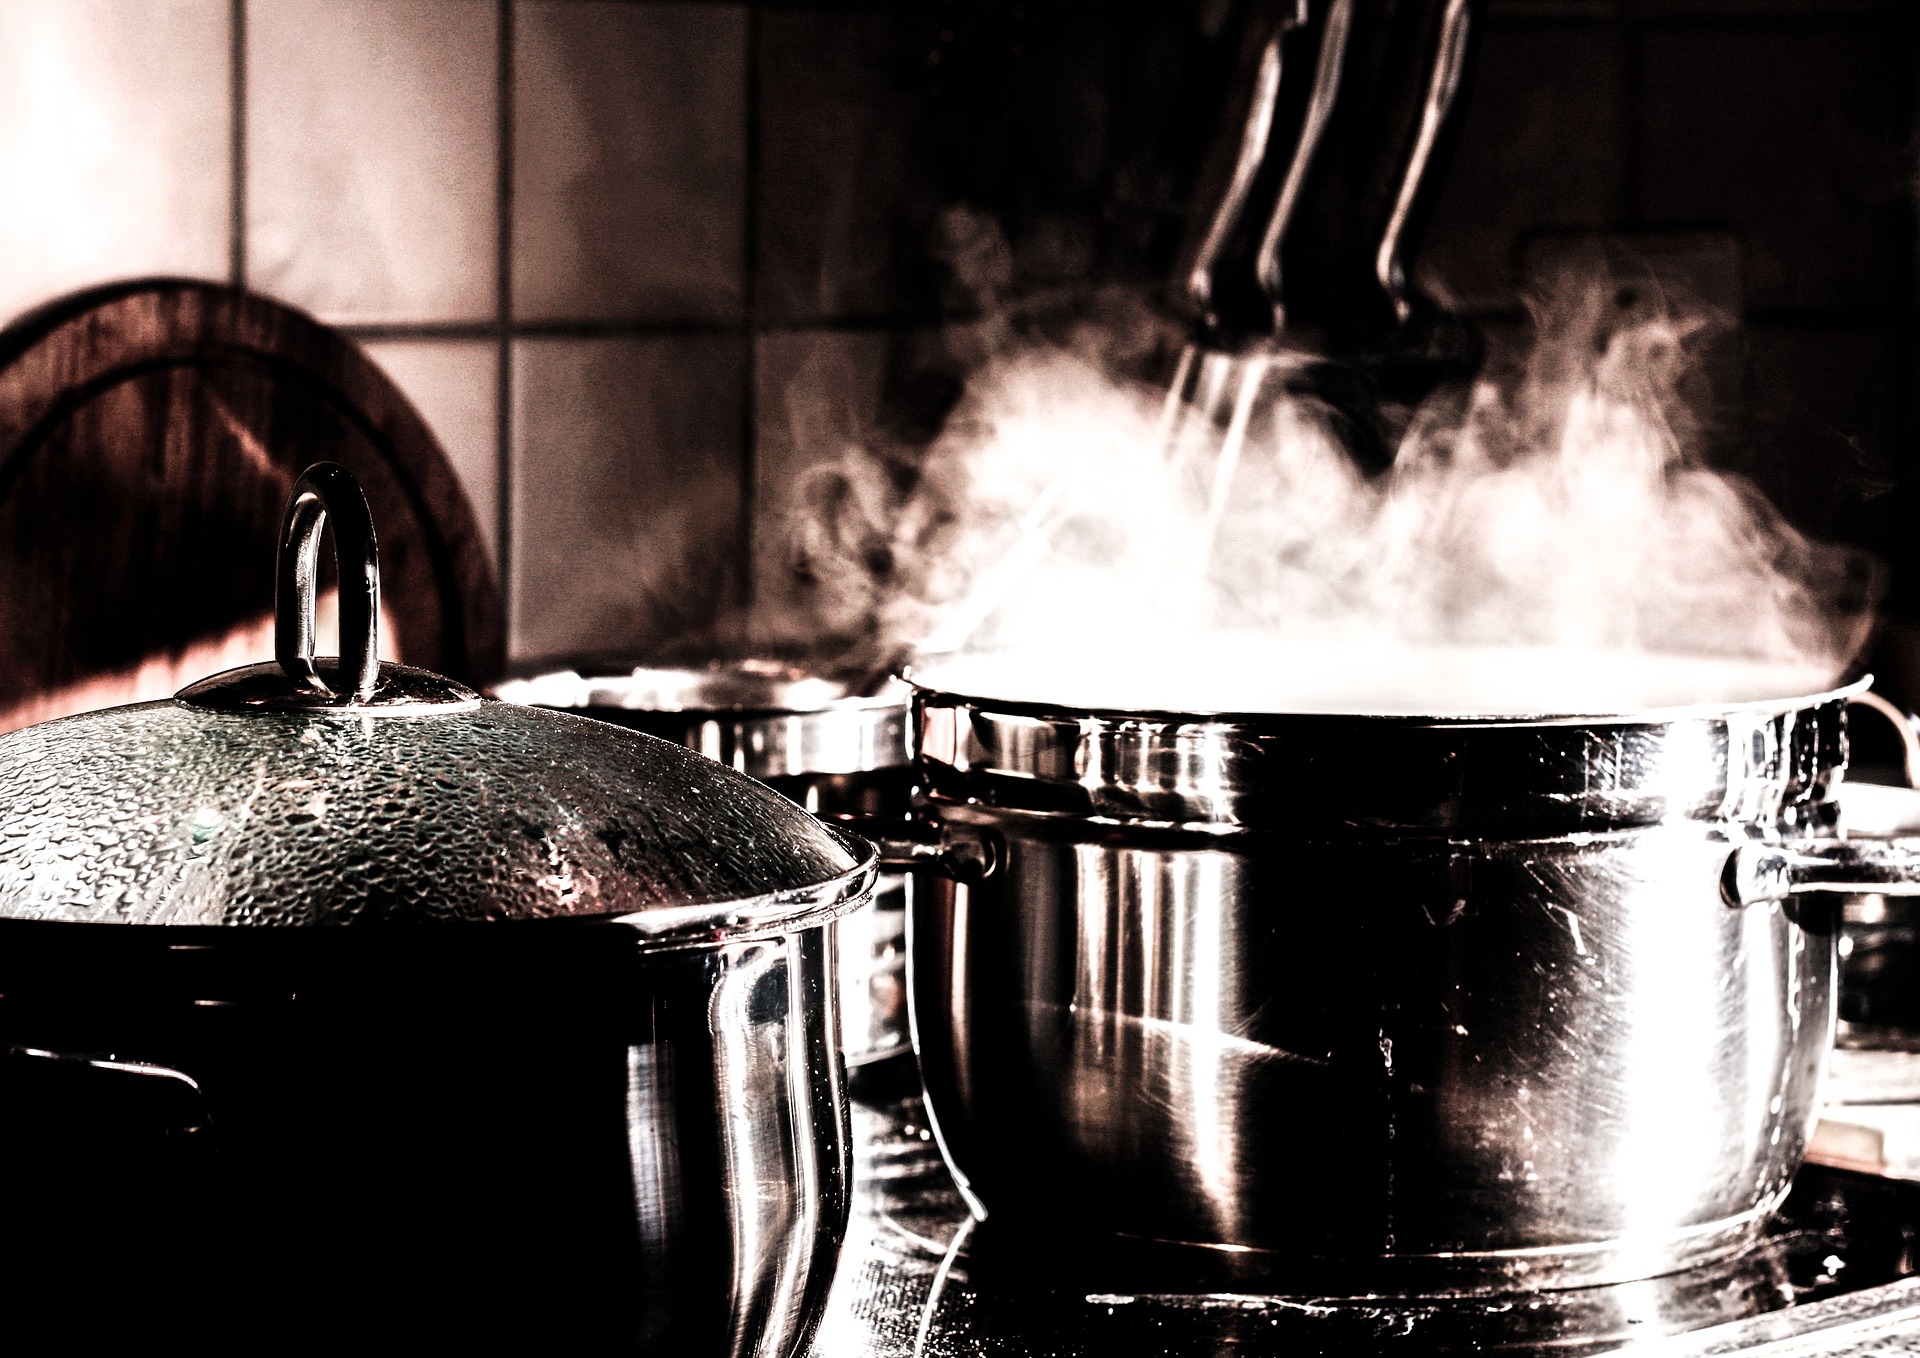 Pots on the boil